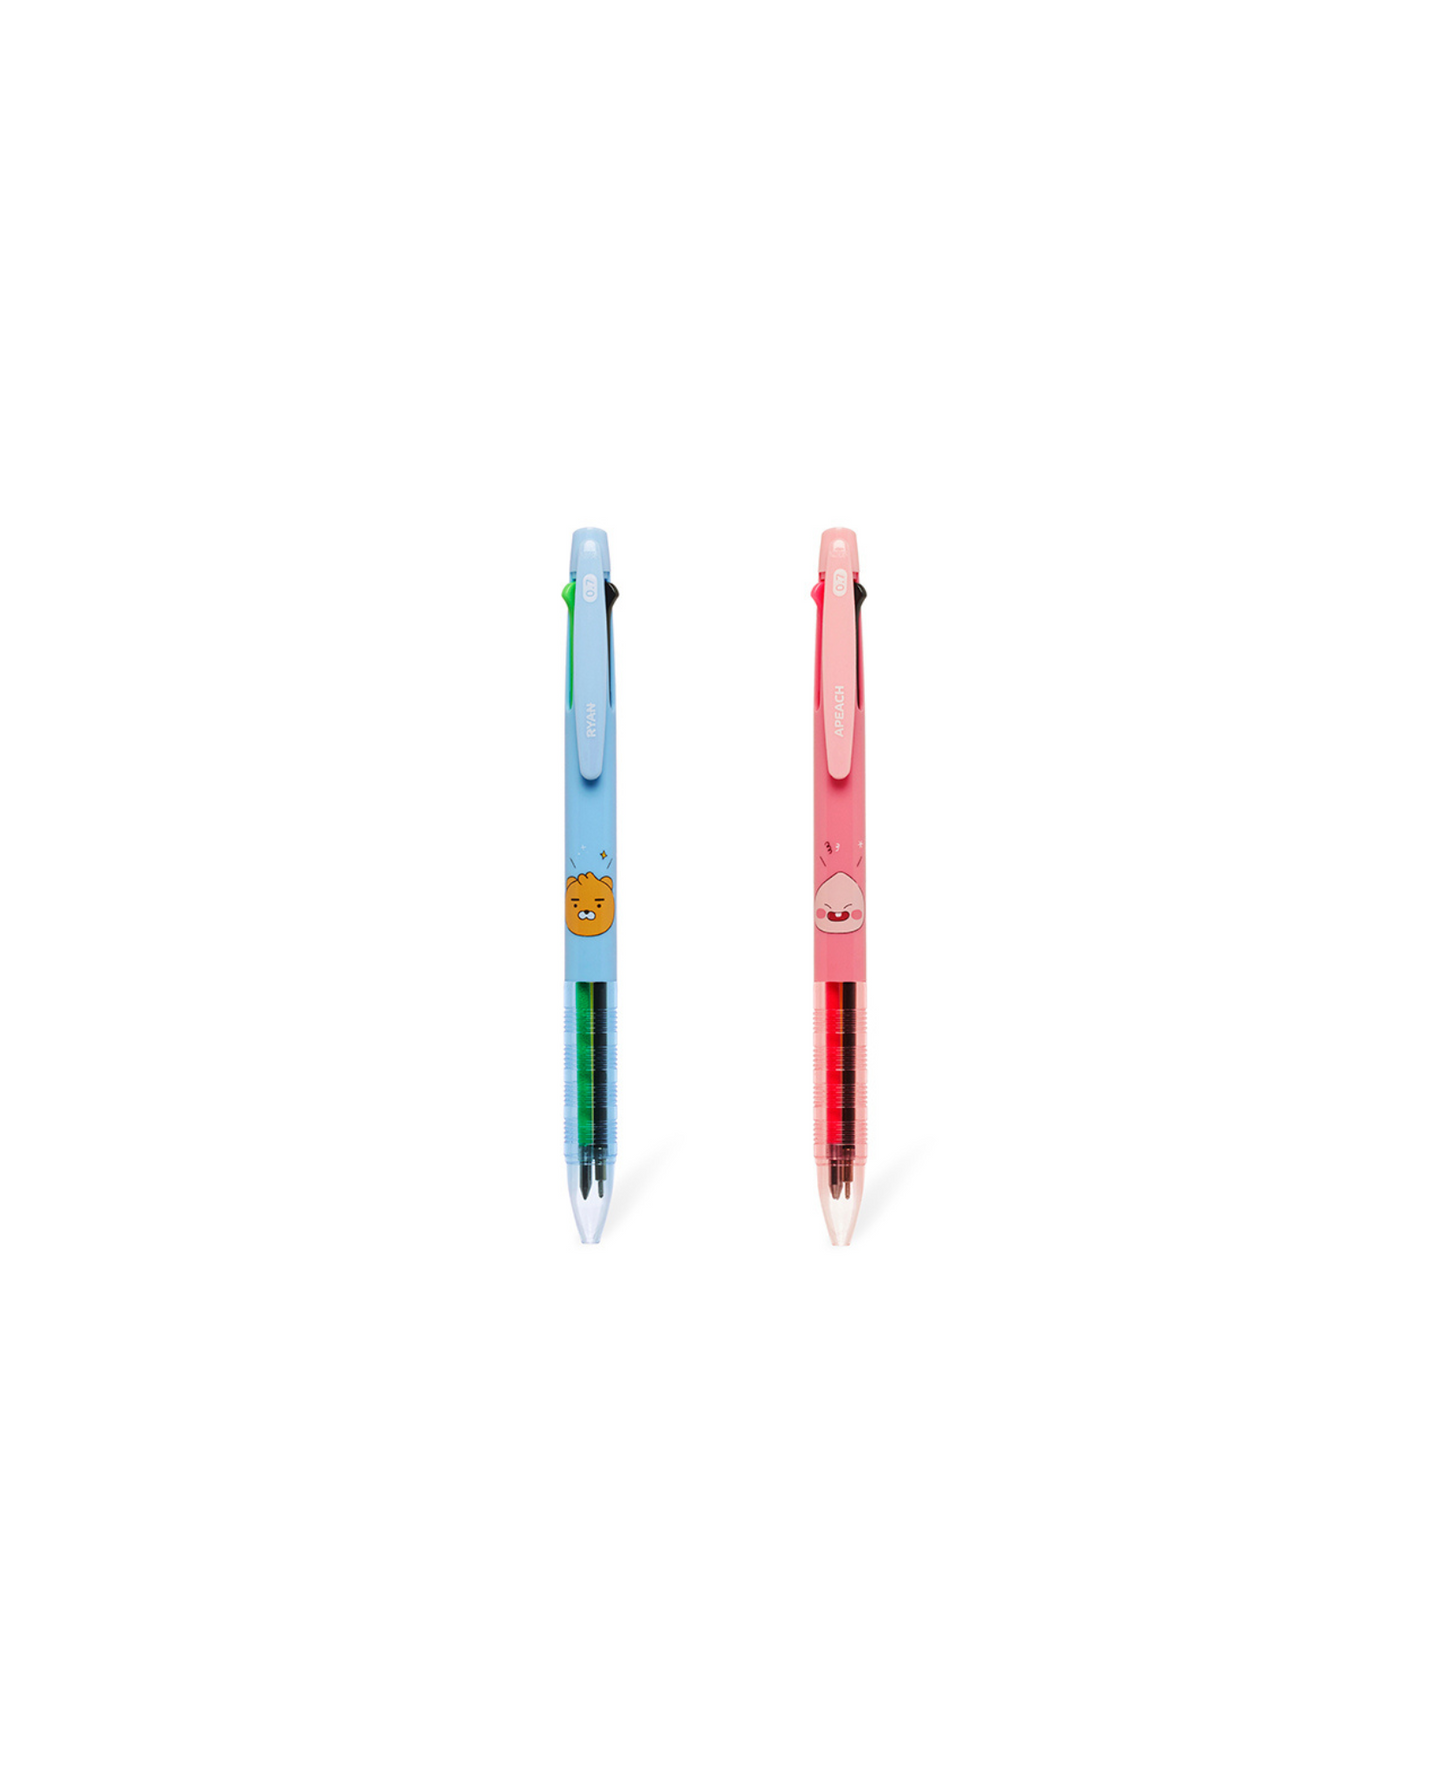 Little Apeach 3-Color Multi-pen KakaoFriends